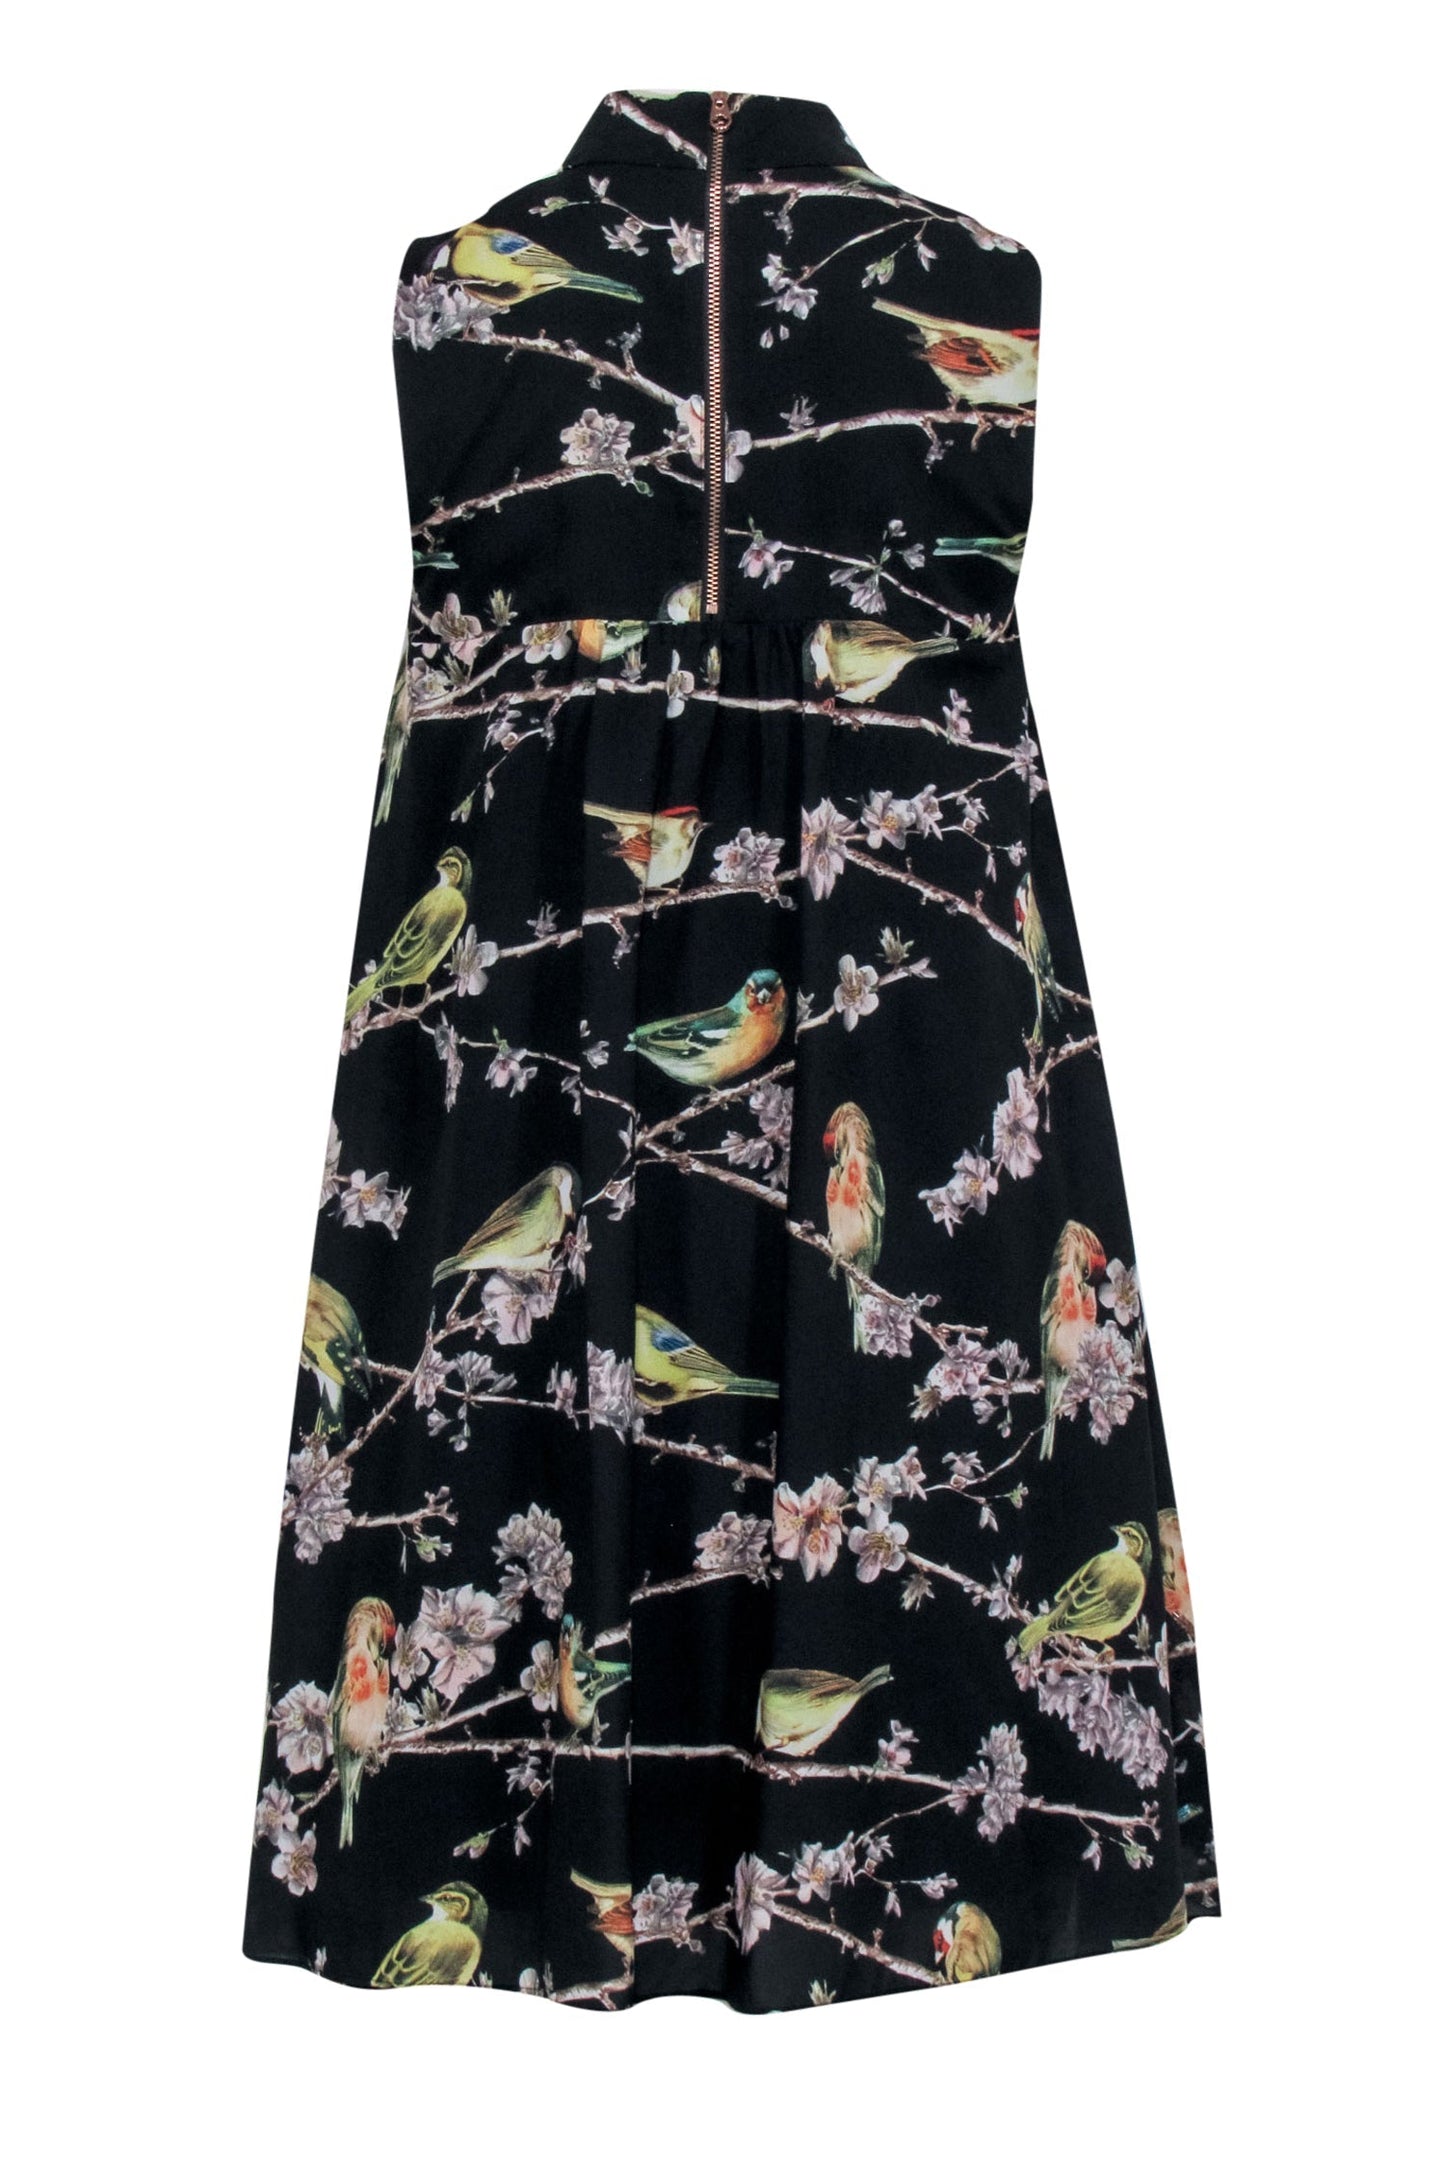 Ted Baker - Black w/ Bird & Floral Print Detail Dress Sz 4